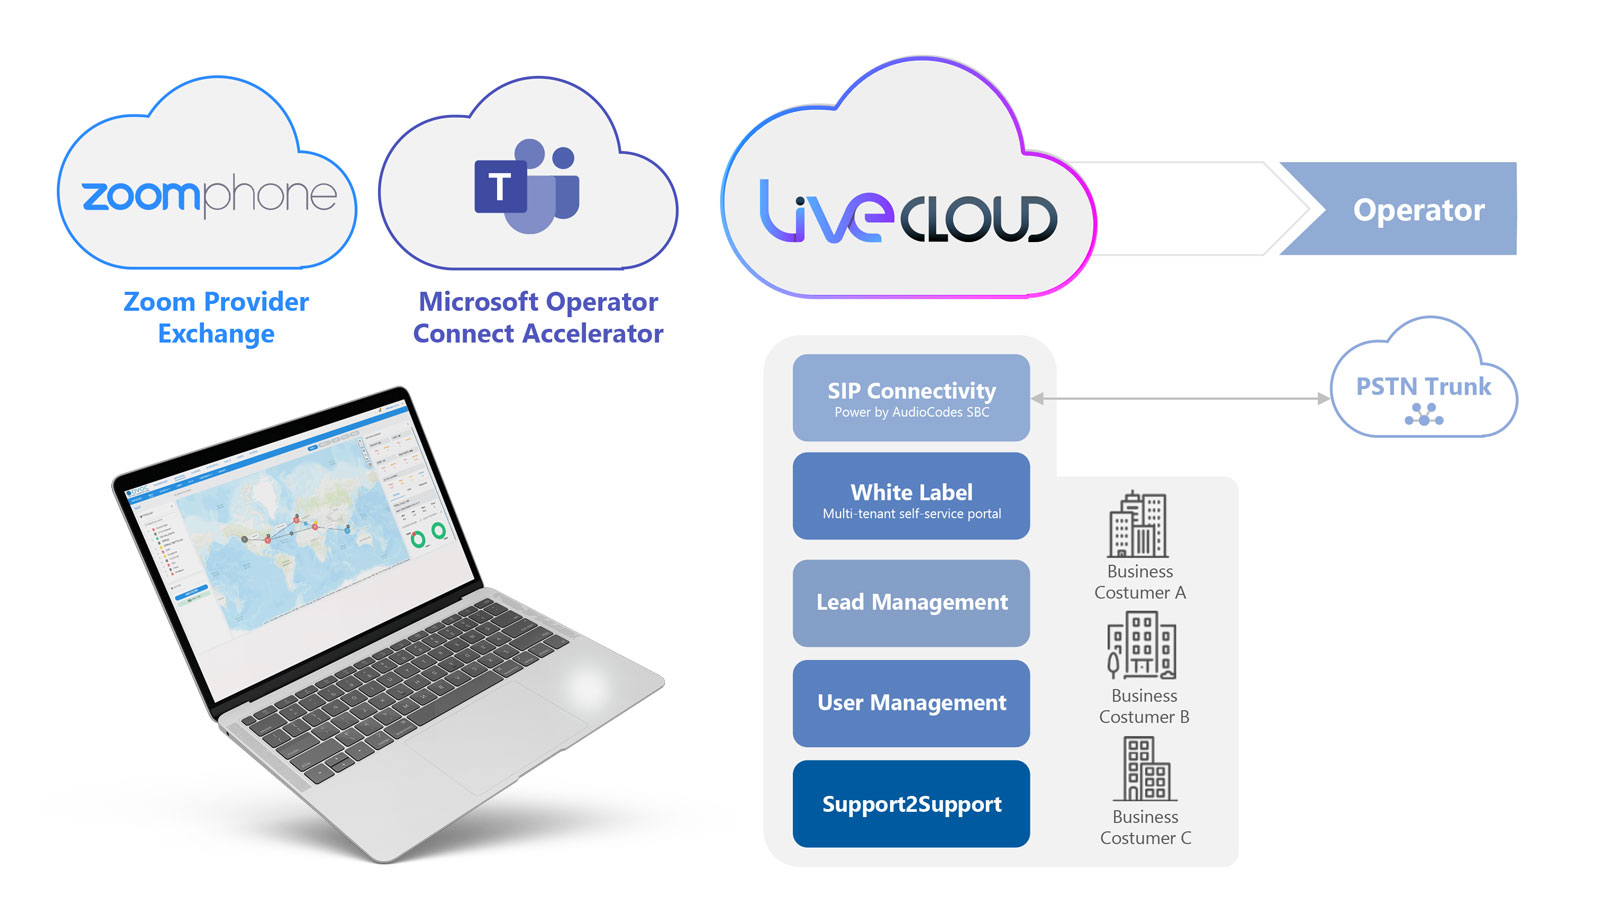 AudioCodes Live Cloud SaaS Solution